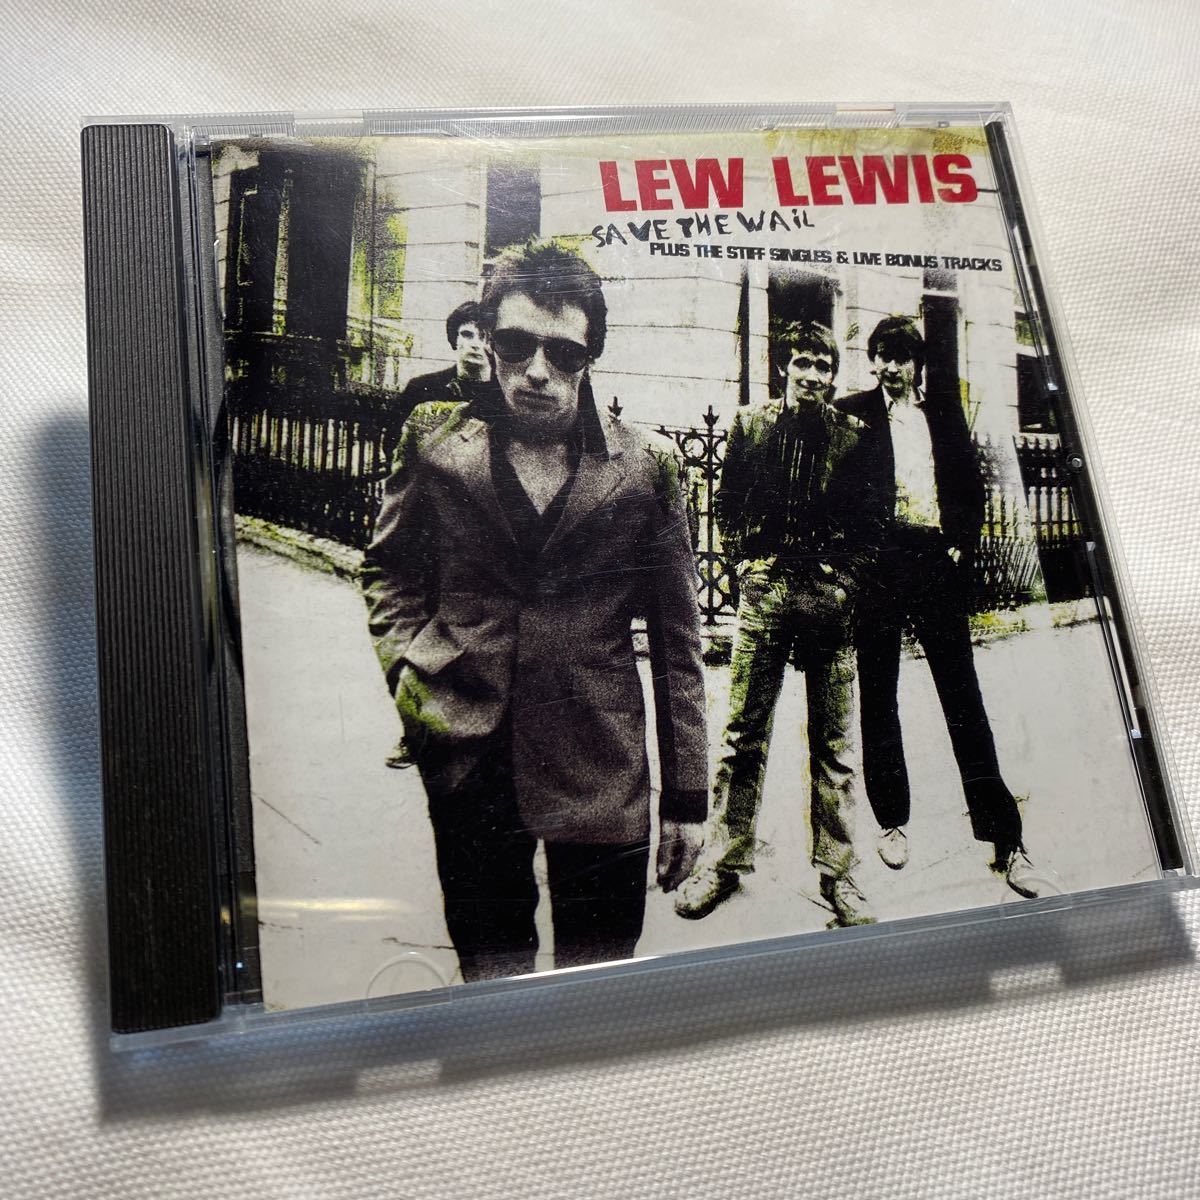 Lew Lewis / Save the Wail CD HUX-033 StiffオリジナルLPに+11曲ボーナス追加 Pub Rock Punk レアCD 廃盤 _画像1